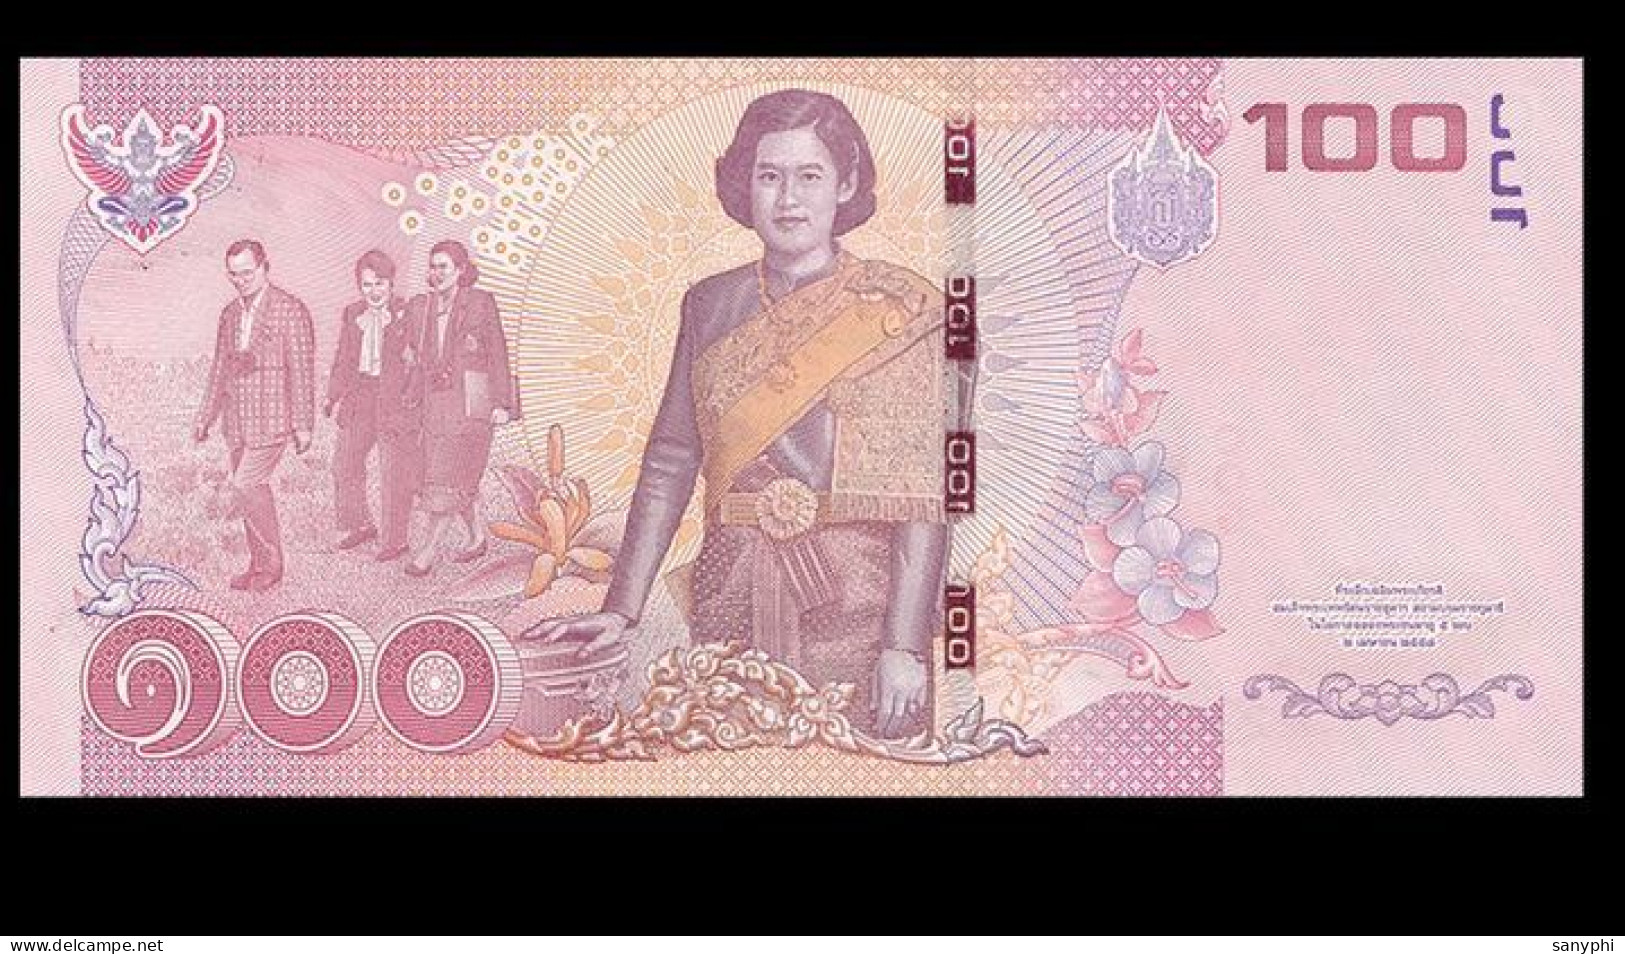 Thailand Banknote 2015 100b - Tailandia